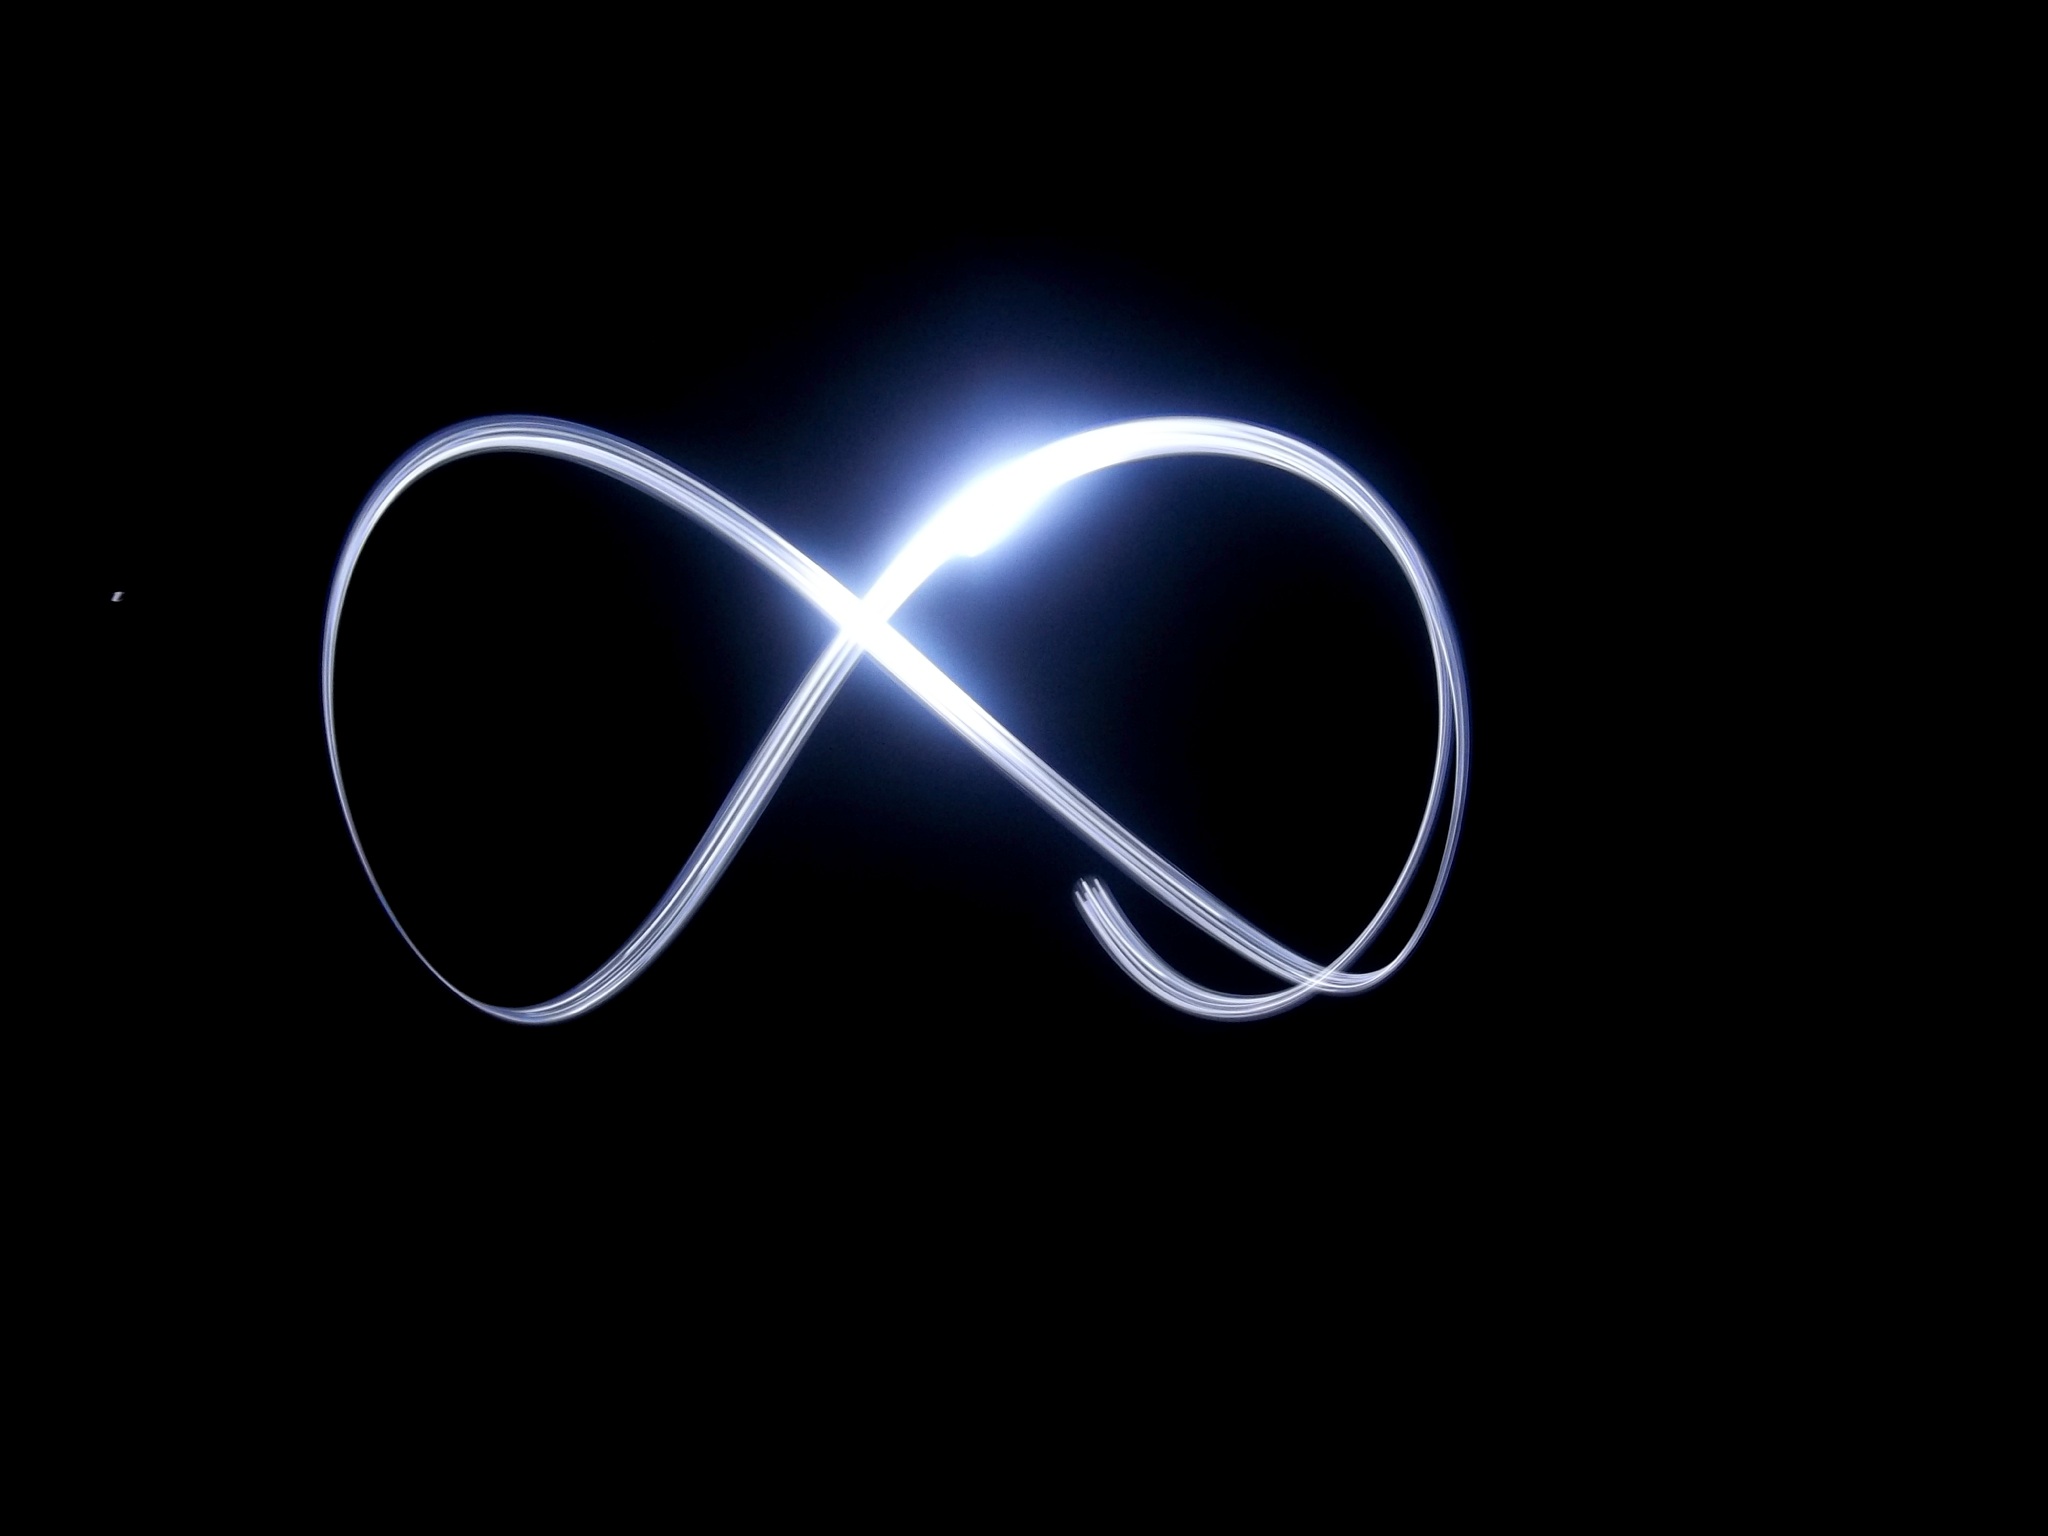 Infinity Sign Wallpaper Galaxy - image #476